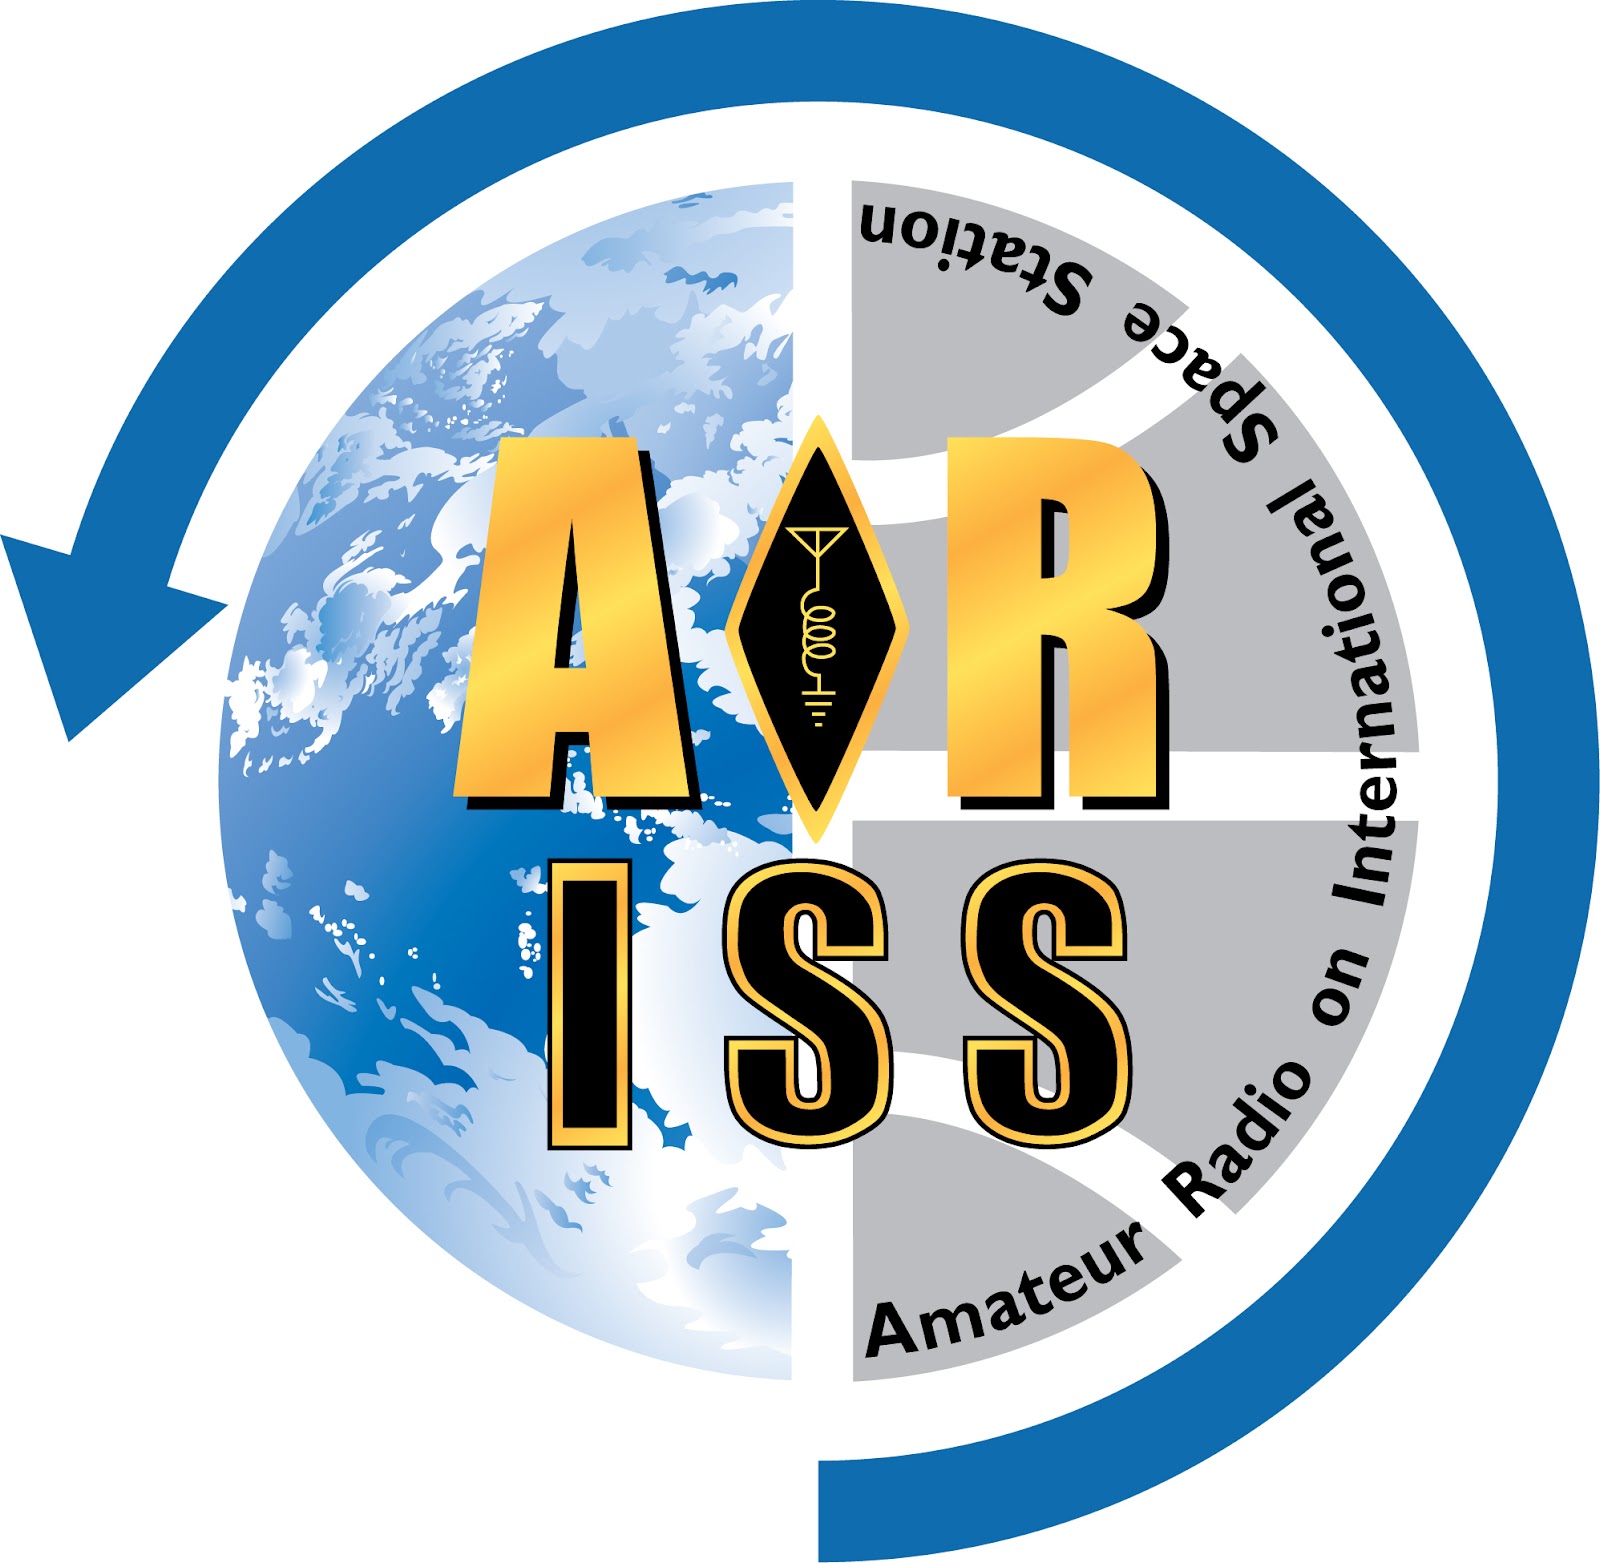 ARISS-USA Volunteer Search